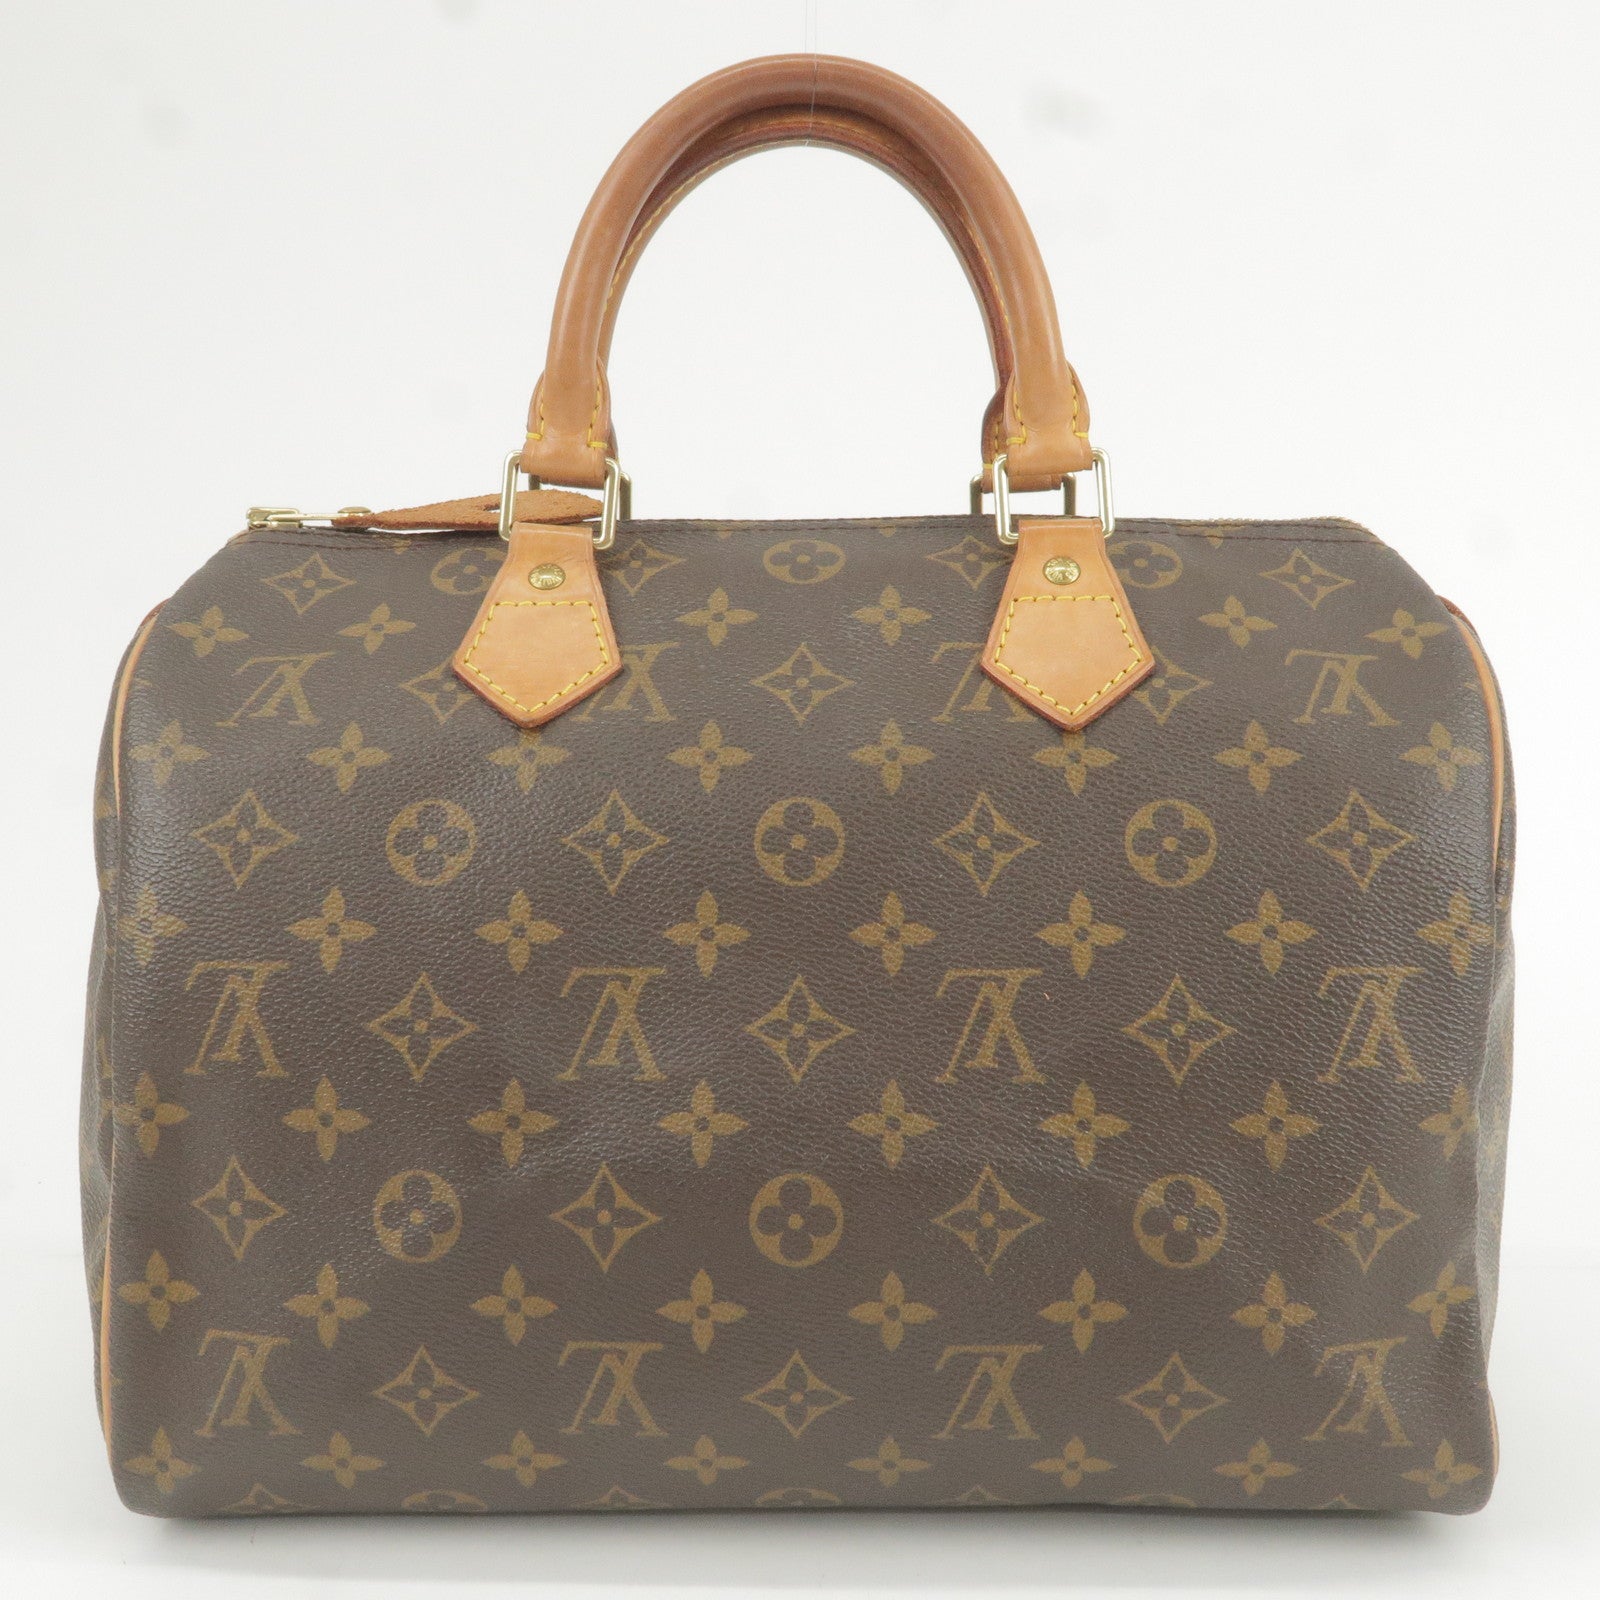 La de los bolsos Louis Vuitton Onatah de segunda mano - M41526 – dct - Speedy - Boston - Bag - ep_vintage luxury Store - Bag - 30 - Vuitton - Monogram - Louis - Hand